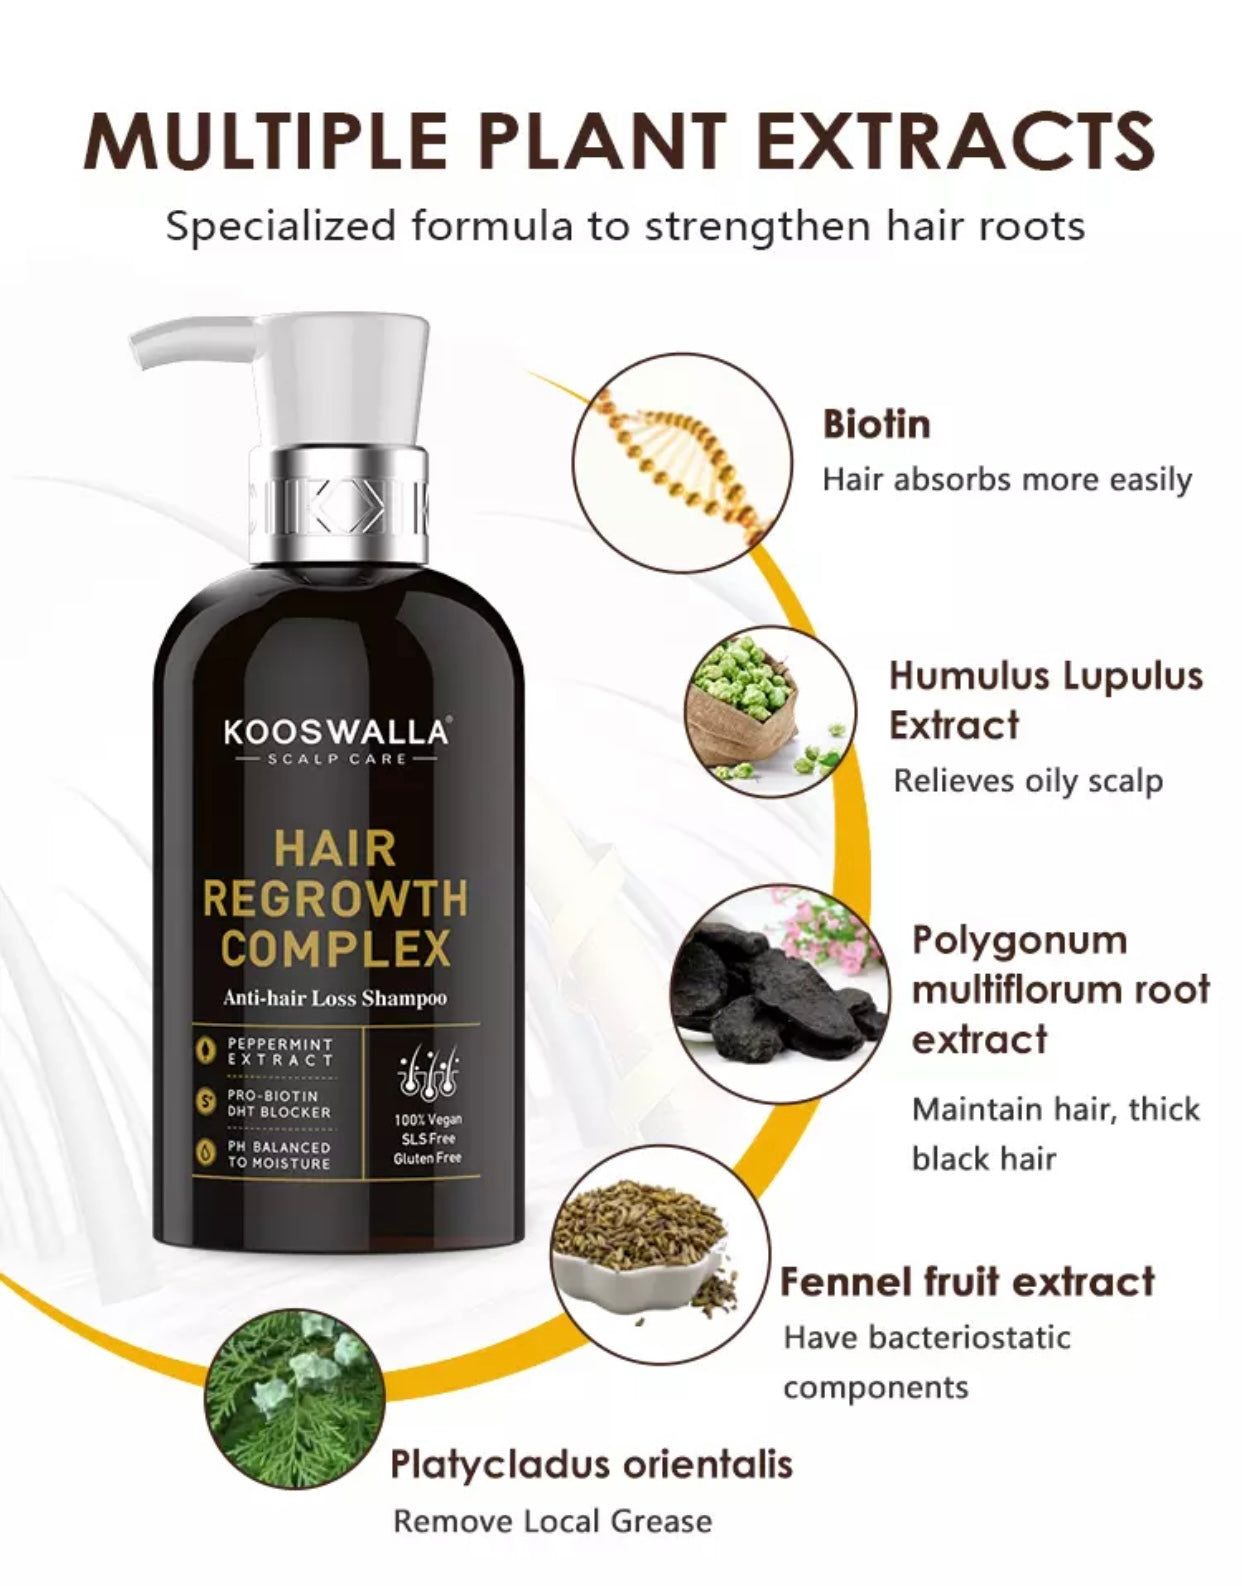 Kooswalla hair regrowth Complex (Anti hair loss) shampoo & conditioner set